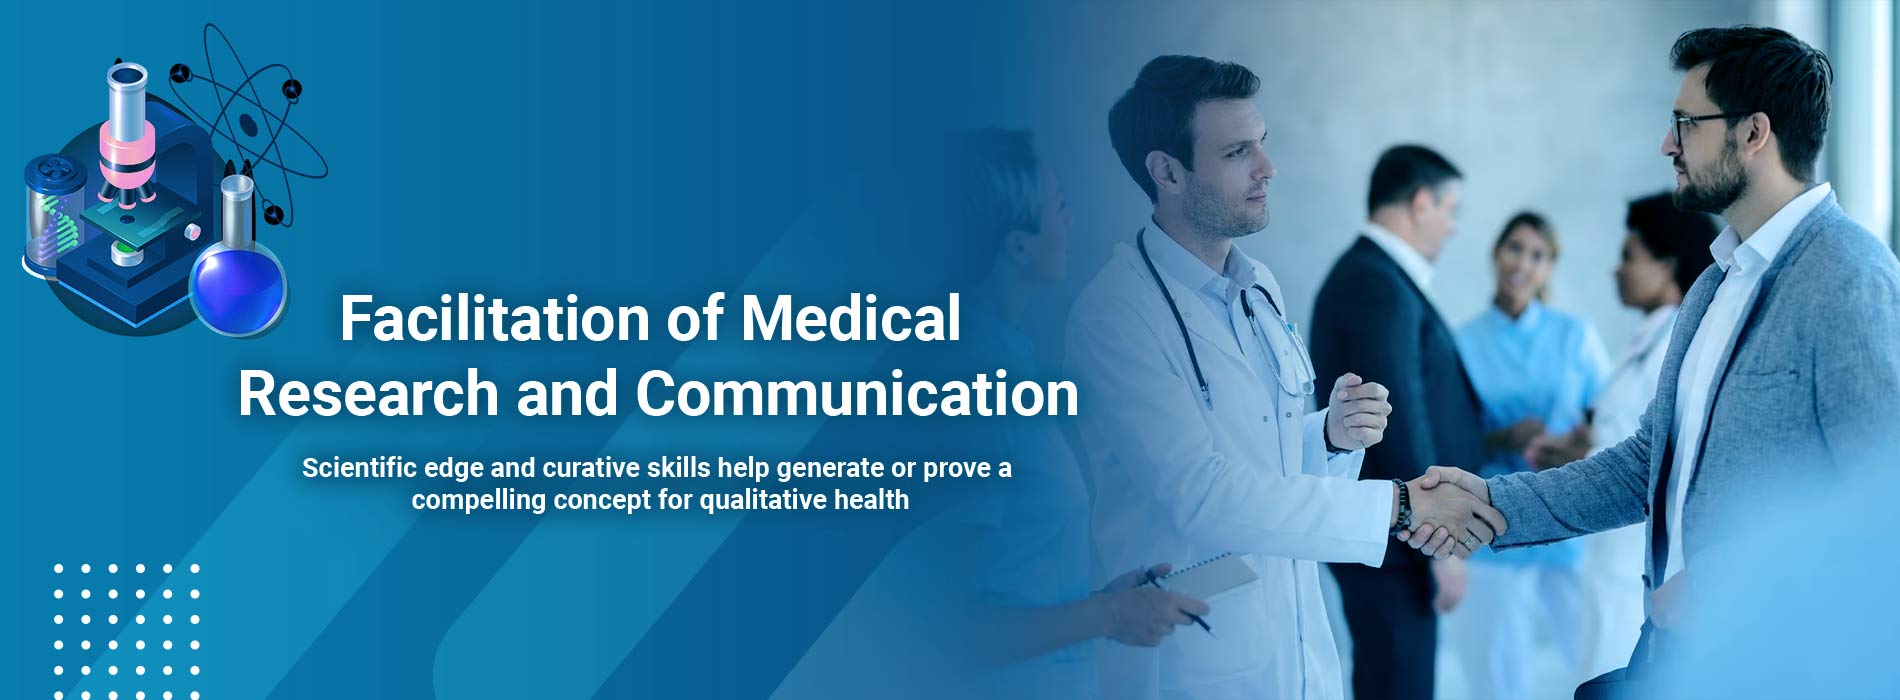 Facilitation-Medical-Research-c ommunication